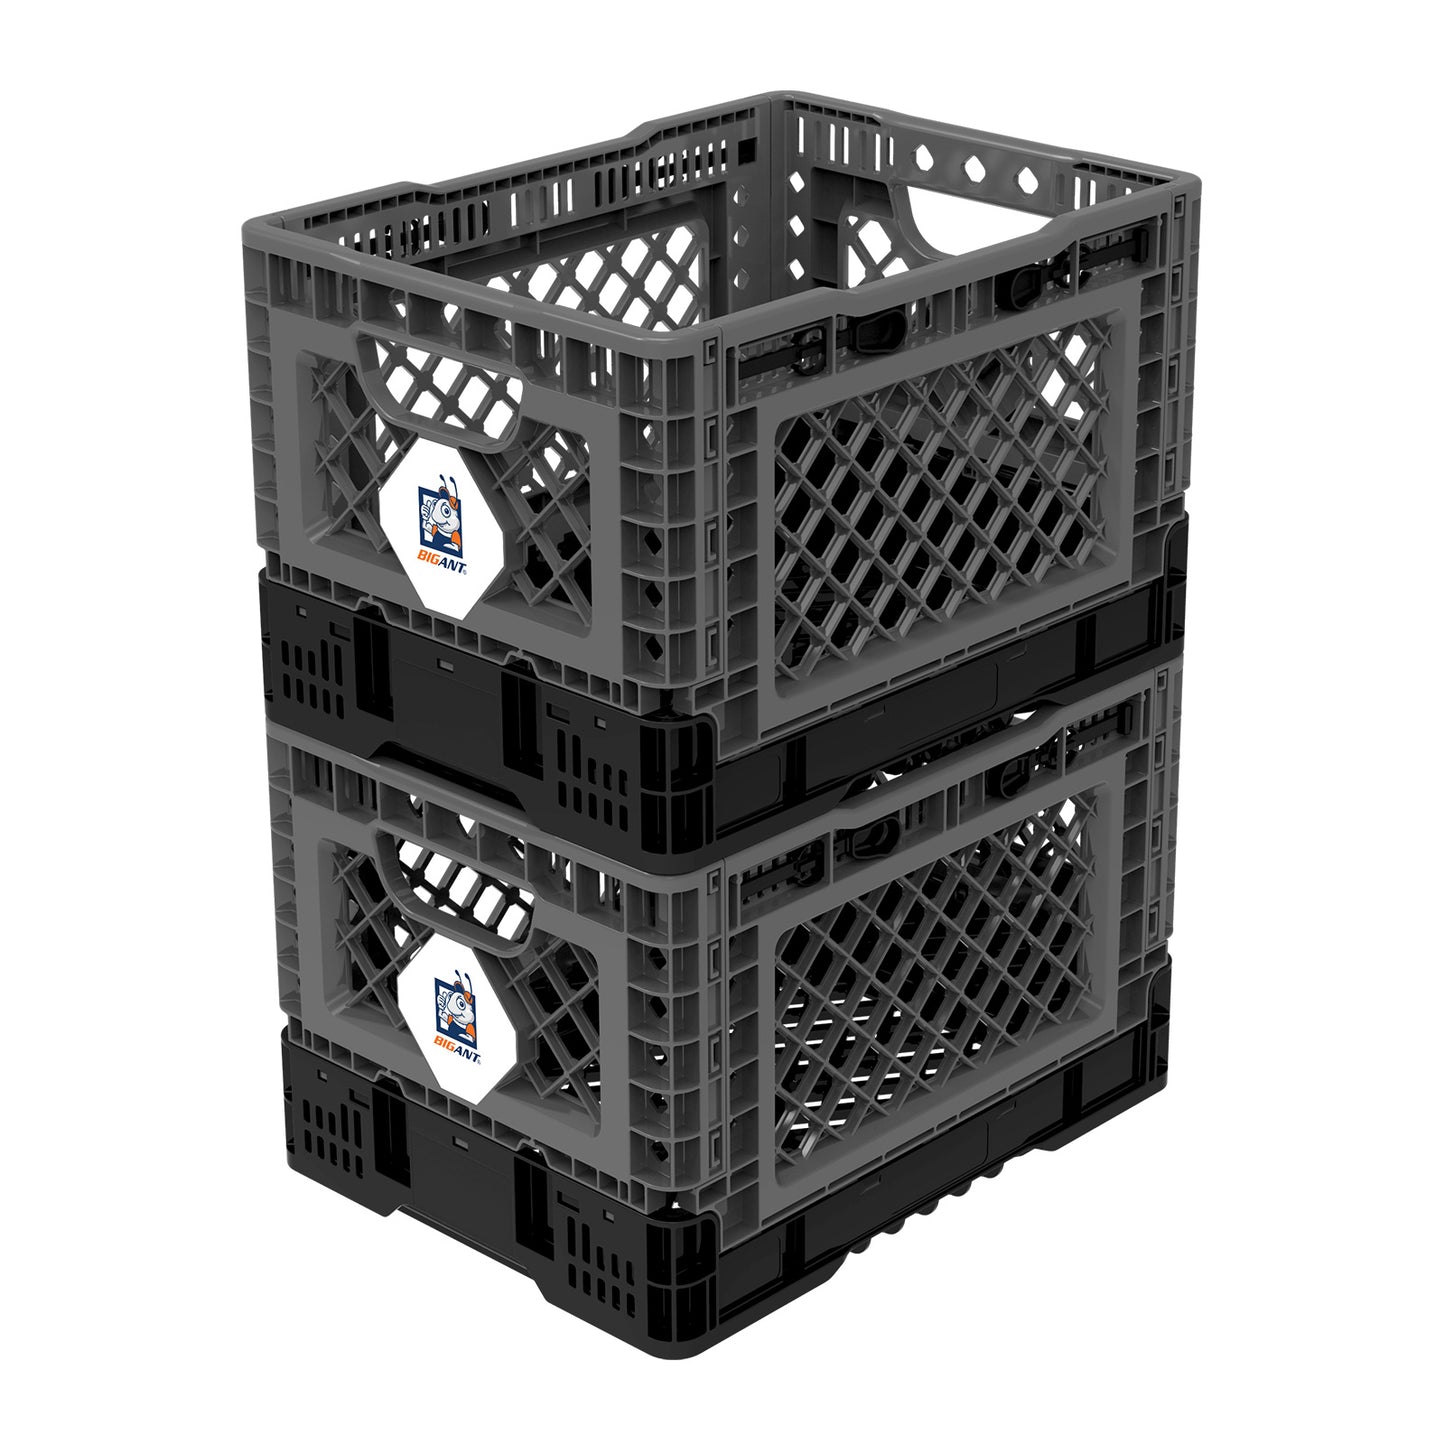 BigAnt Charcoal Smart Foldable Stackable Crate 25L